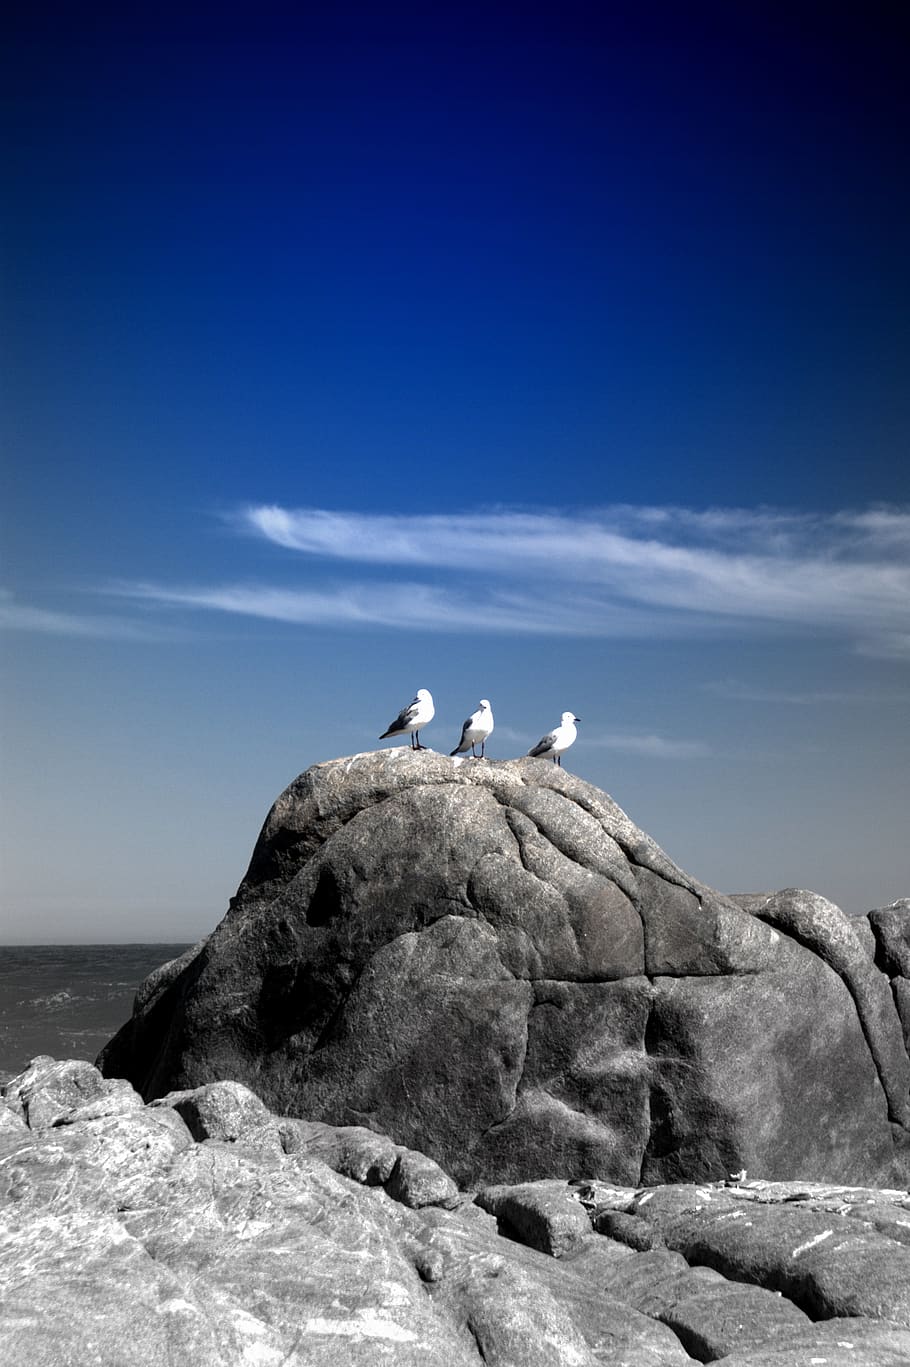 Stone scene. Птичий камень. Каменная птица в горах. Птицы на горе соларо. Камень с птицей на берегу моря.